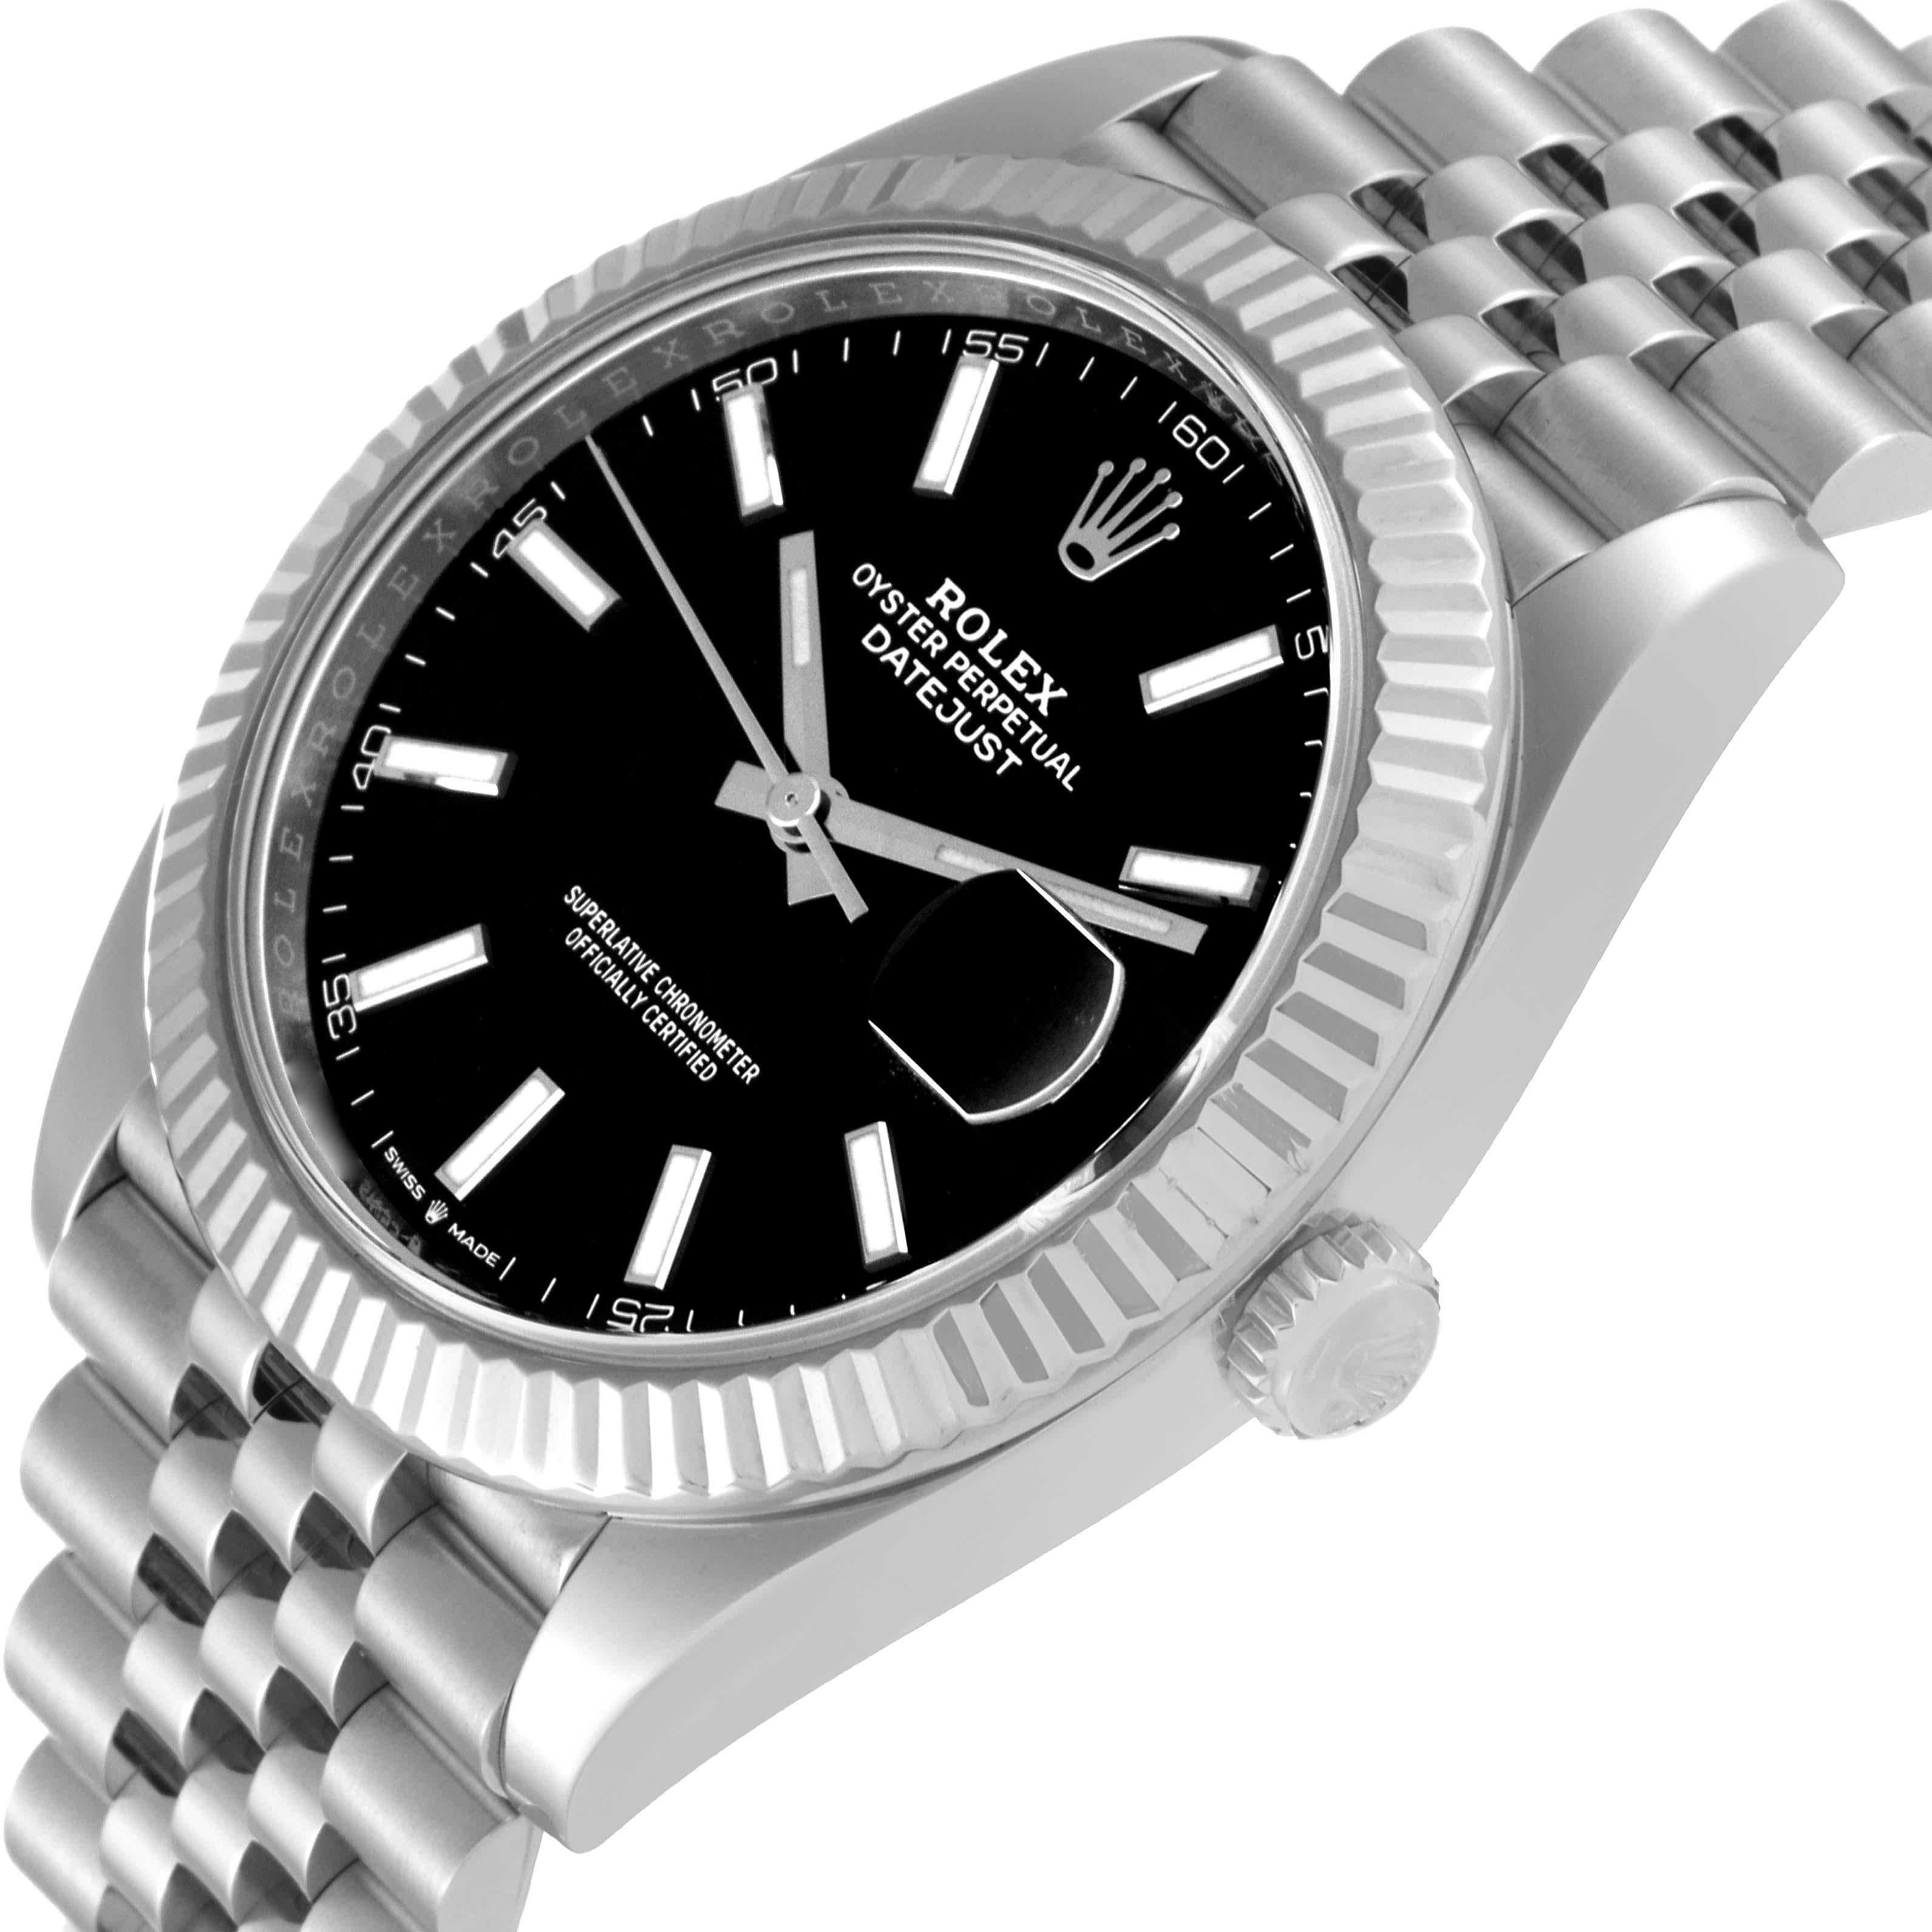 Rolex Datejust 41 Steel White Gold Black Dial Mens Watch 126334 6